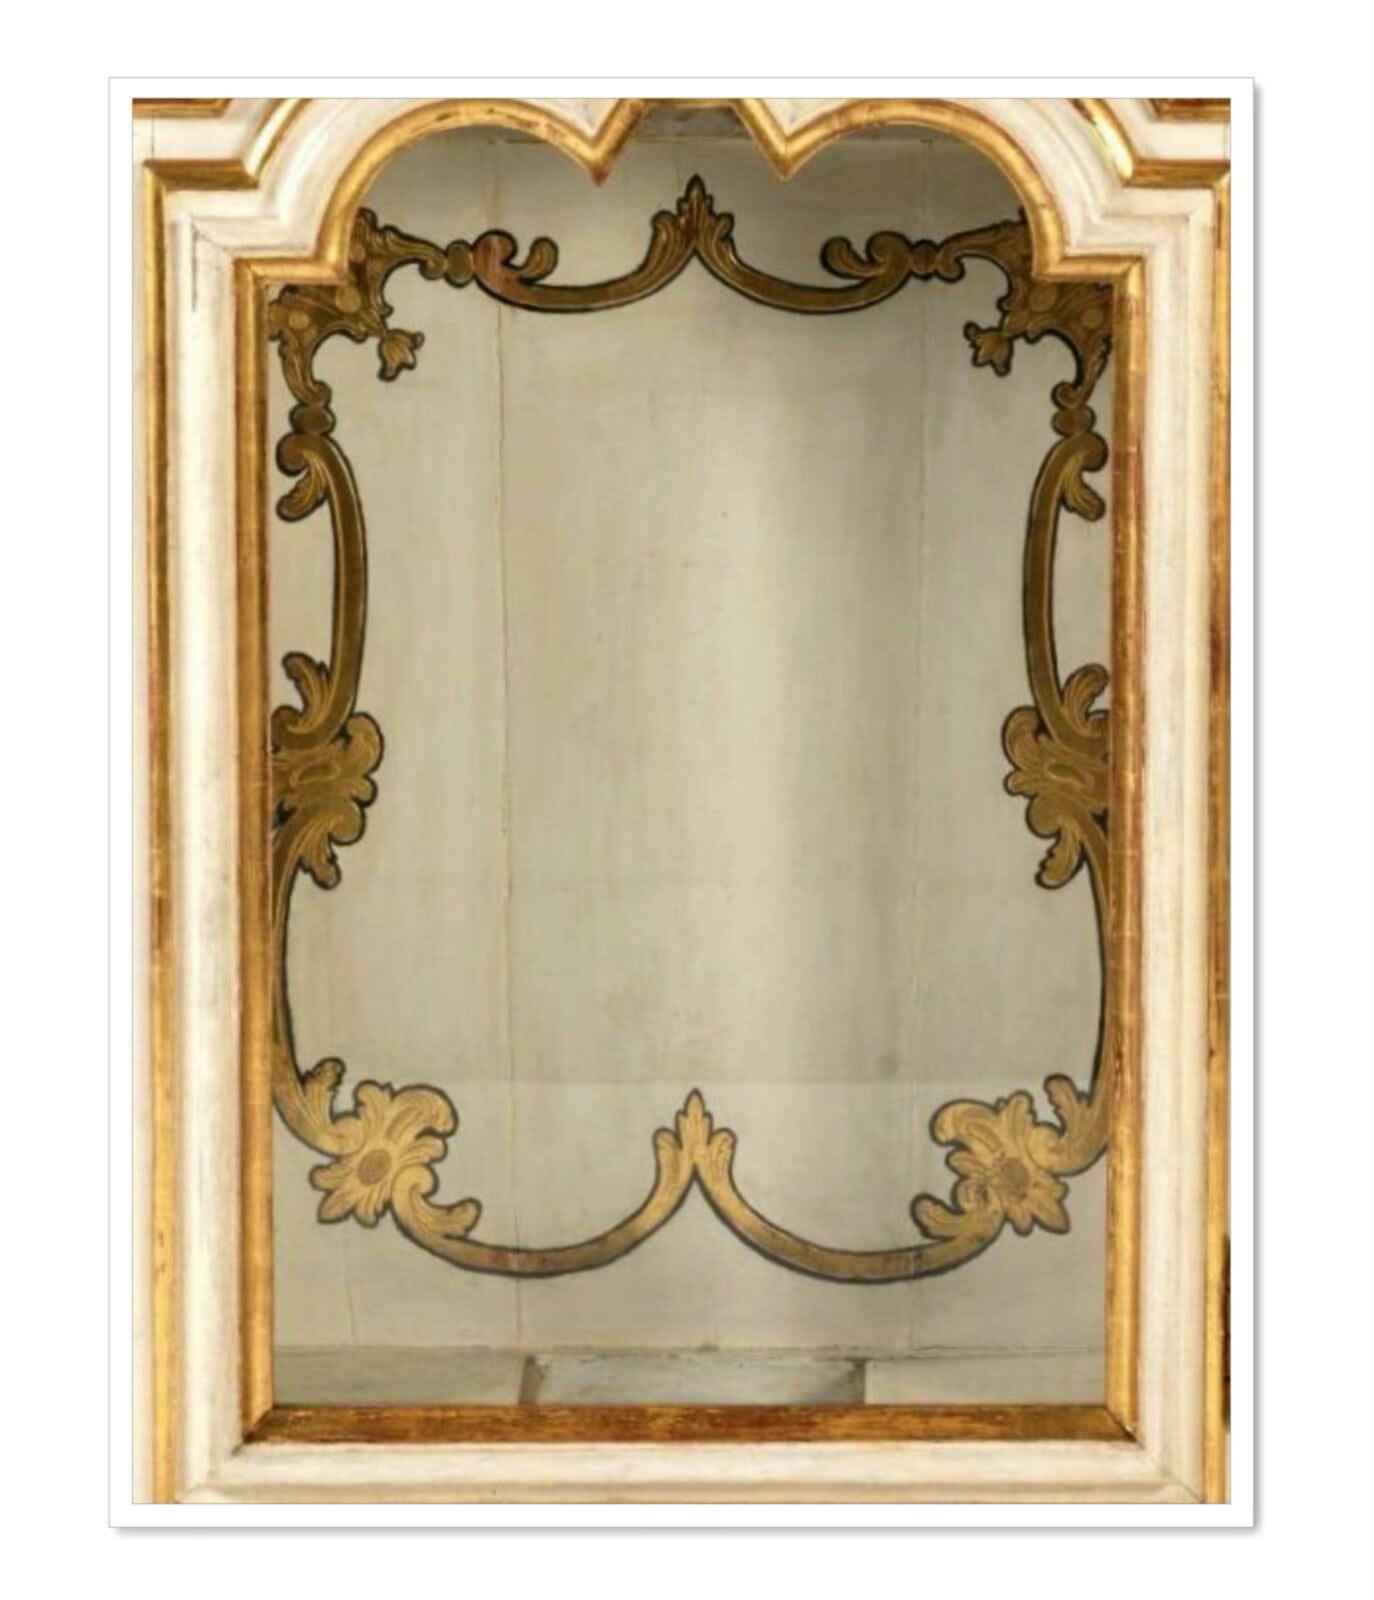 Italian cabinet
18th century
Restored
Gold wood lacquer
Measures: 80cm x 65cm x 150cm.